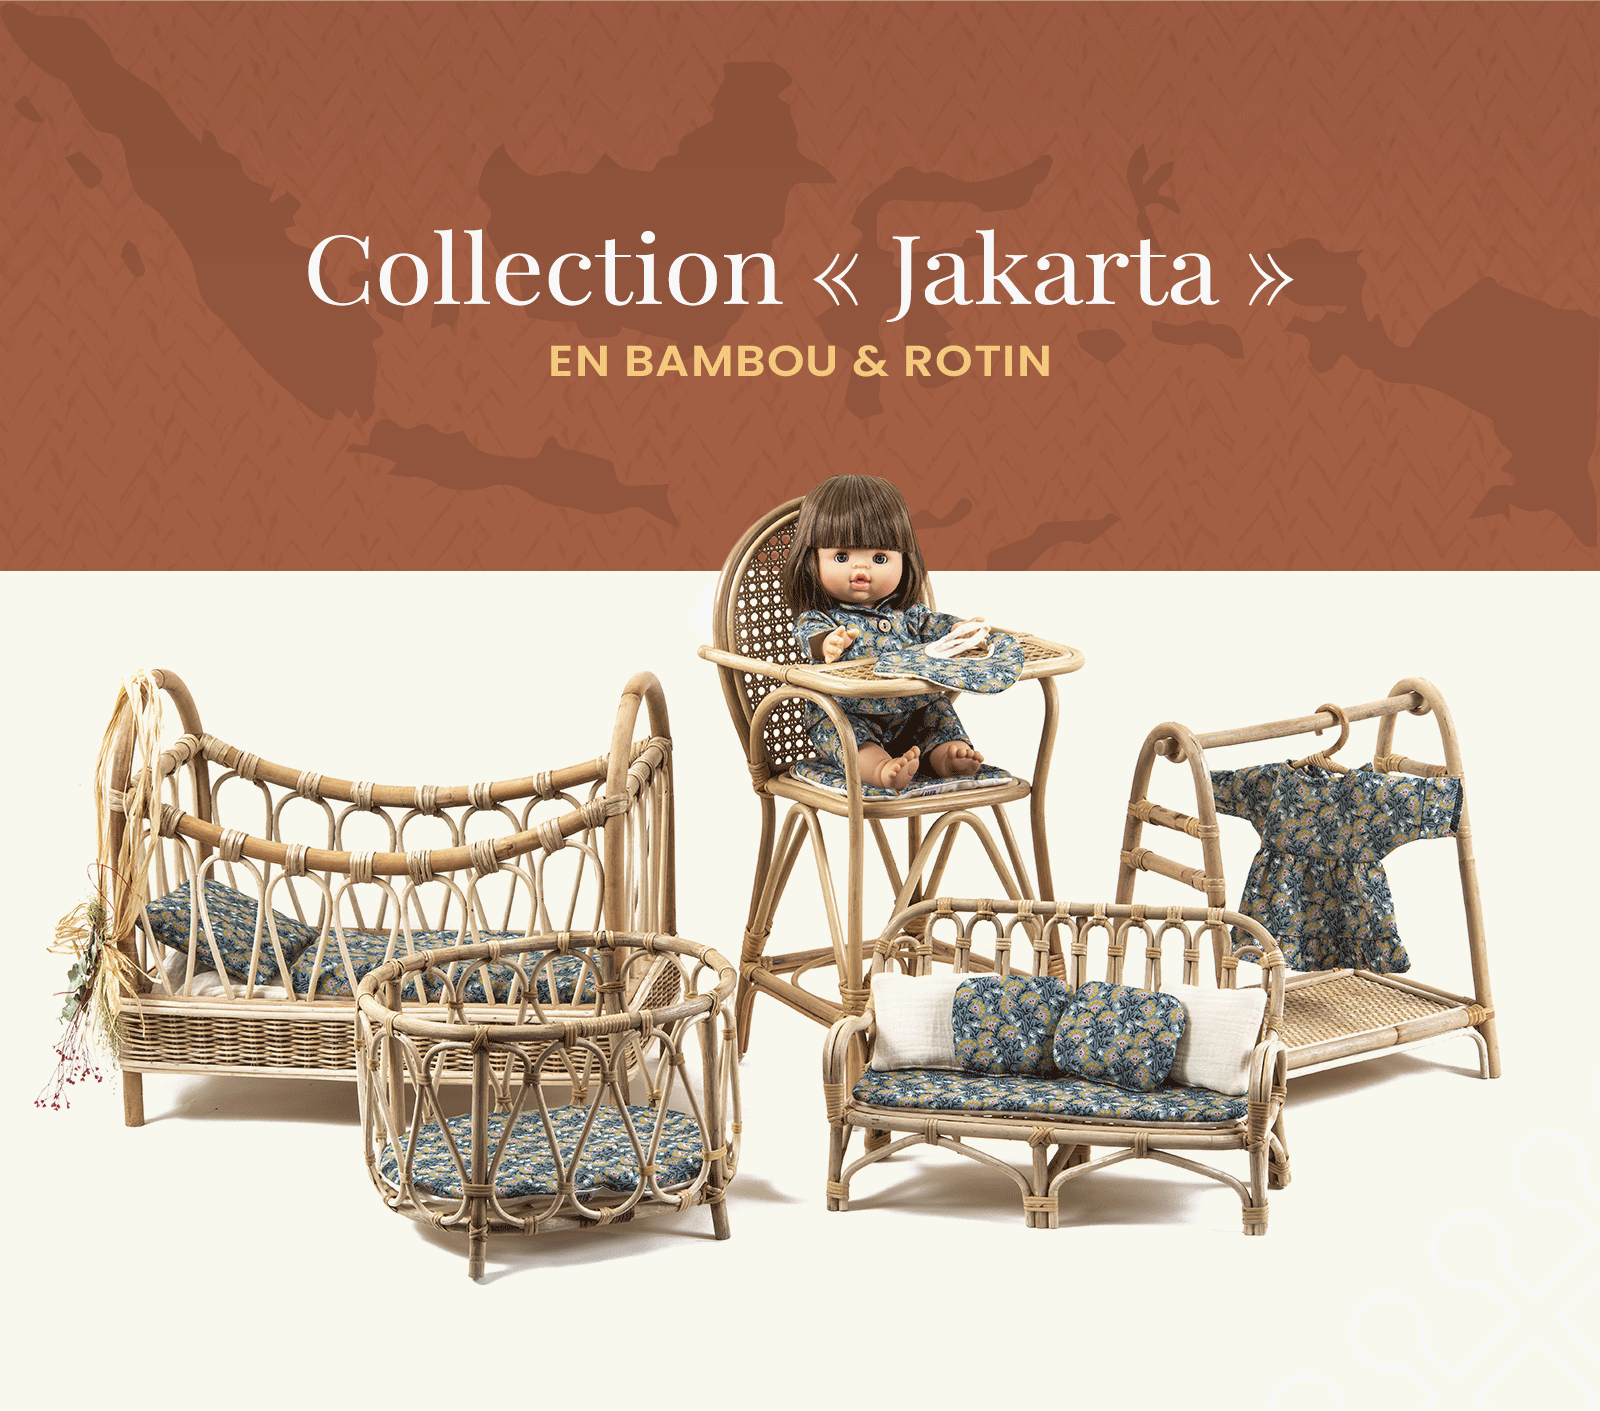 La Collection Jakarta